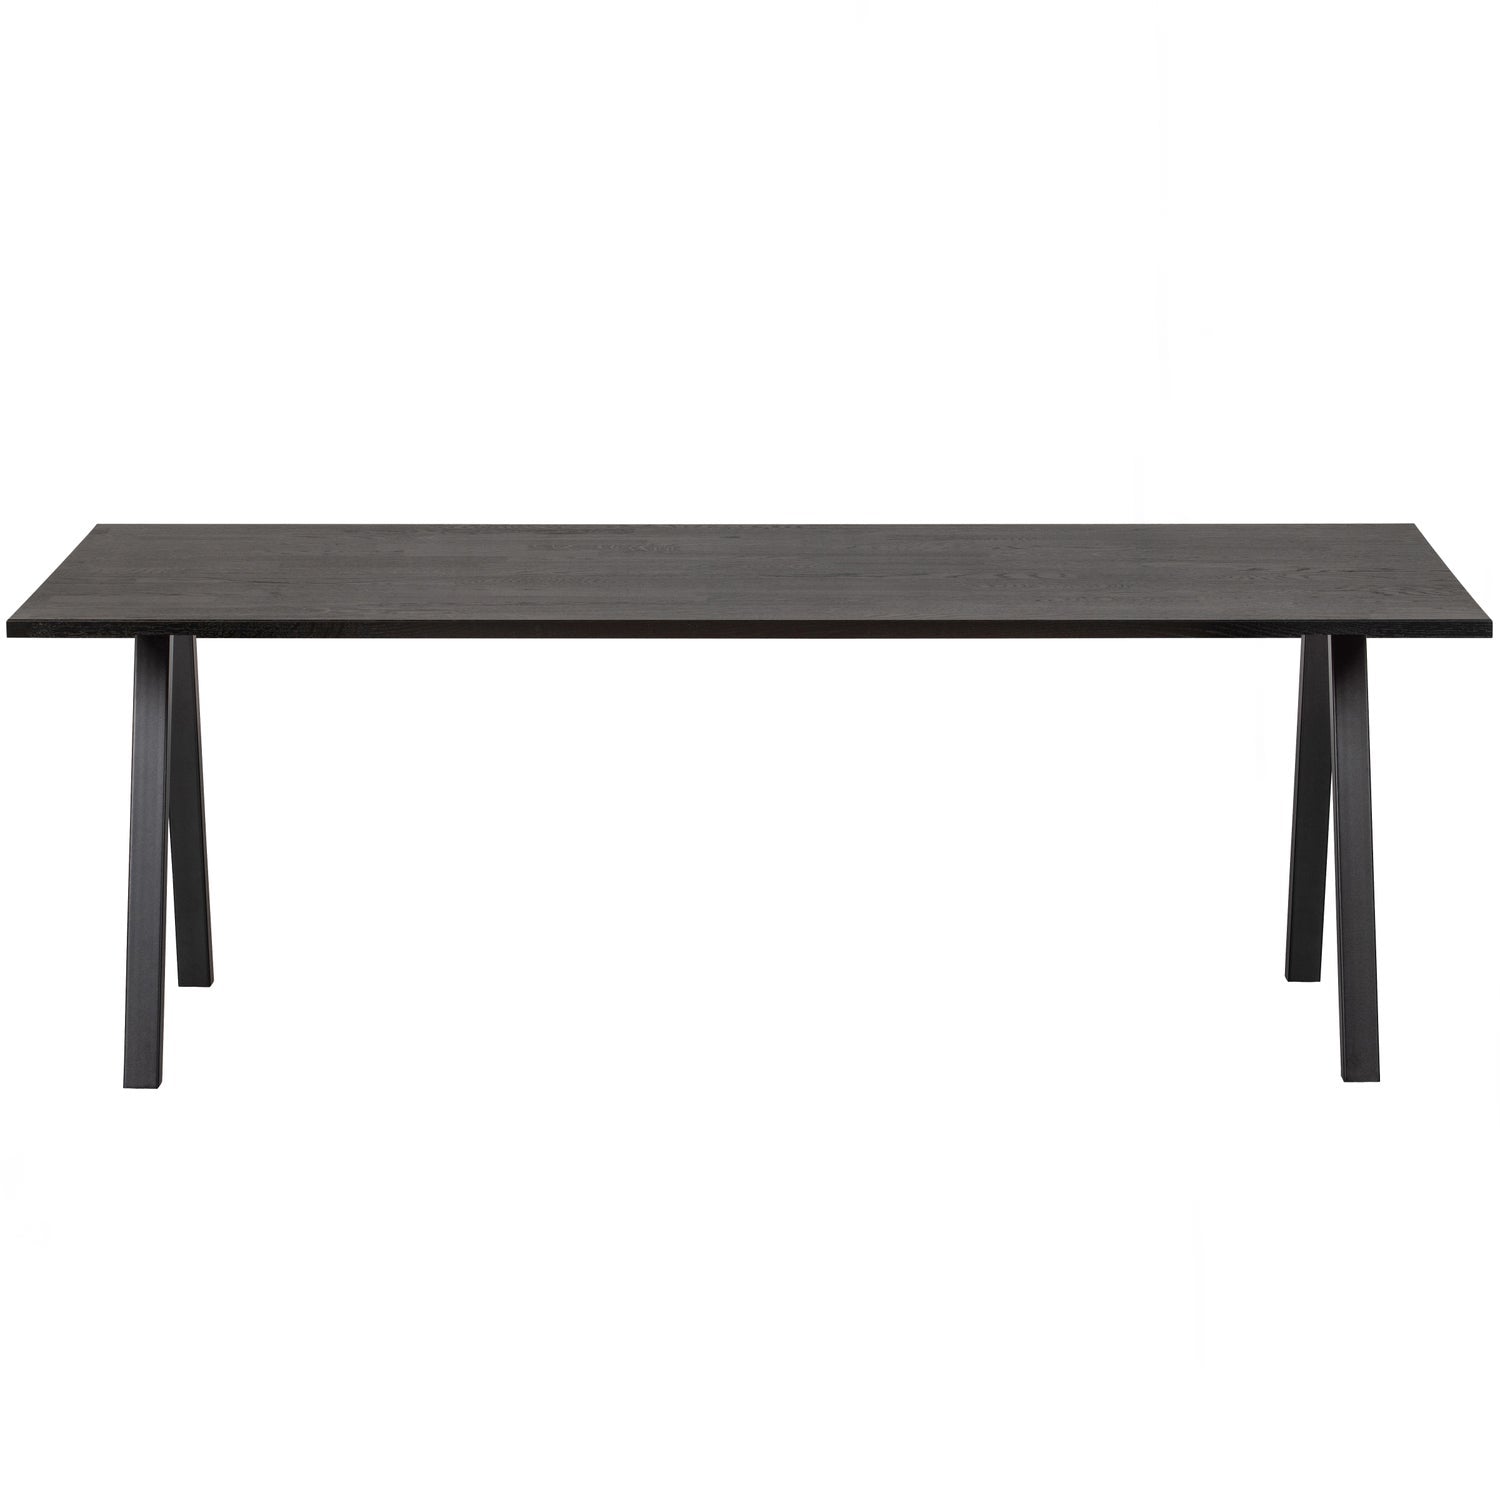 TABLO TABLE OAK BLACKNIGHT 220X90 [fsc] & SQUARE LEG